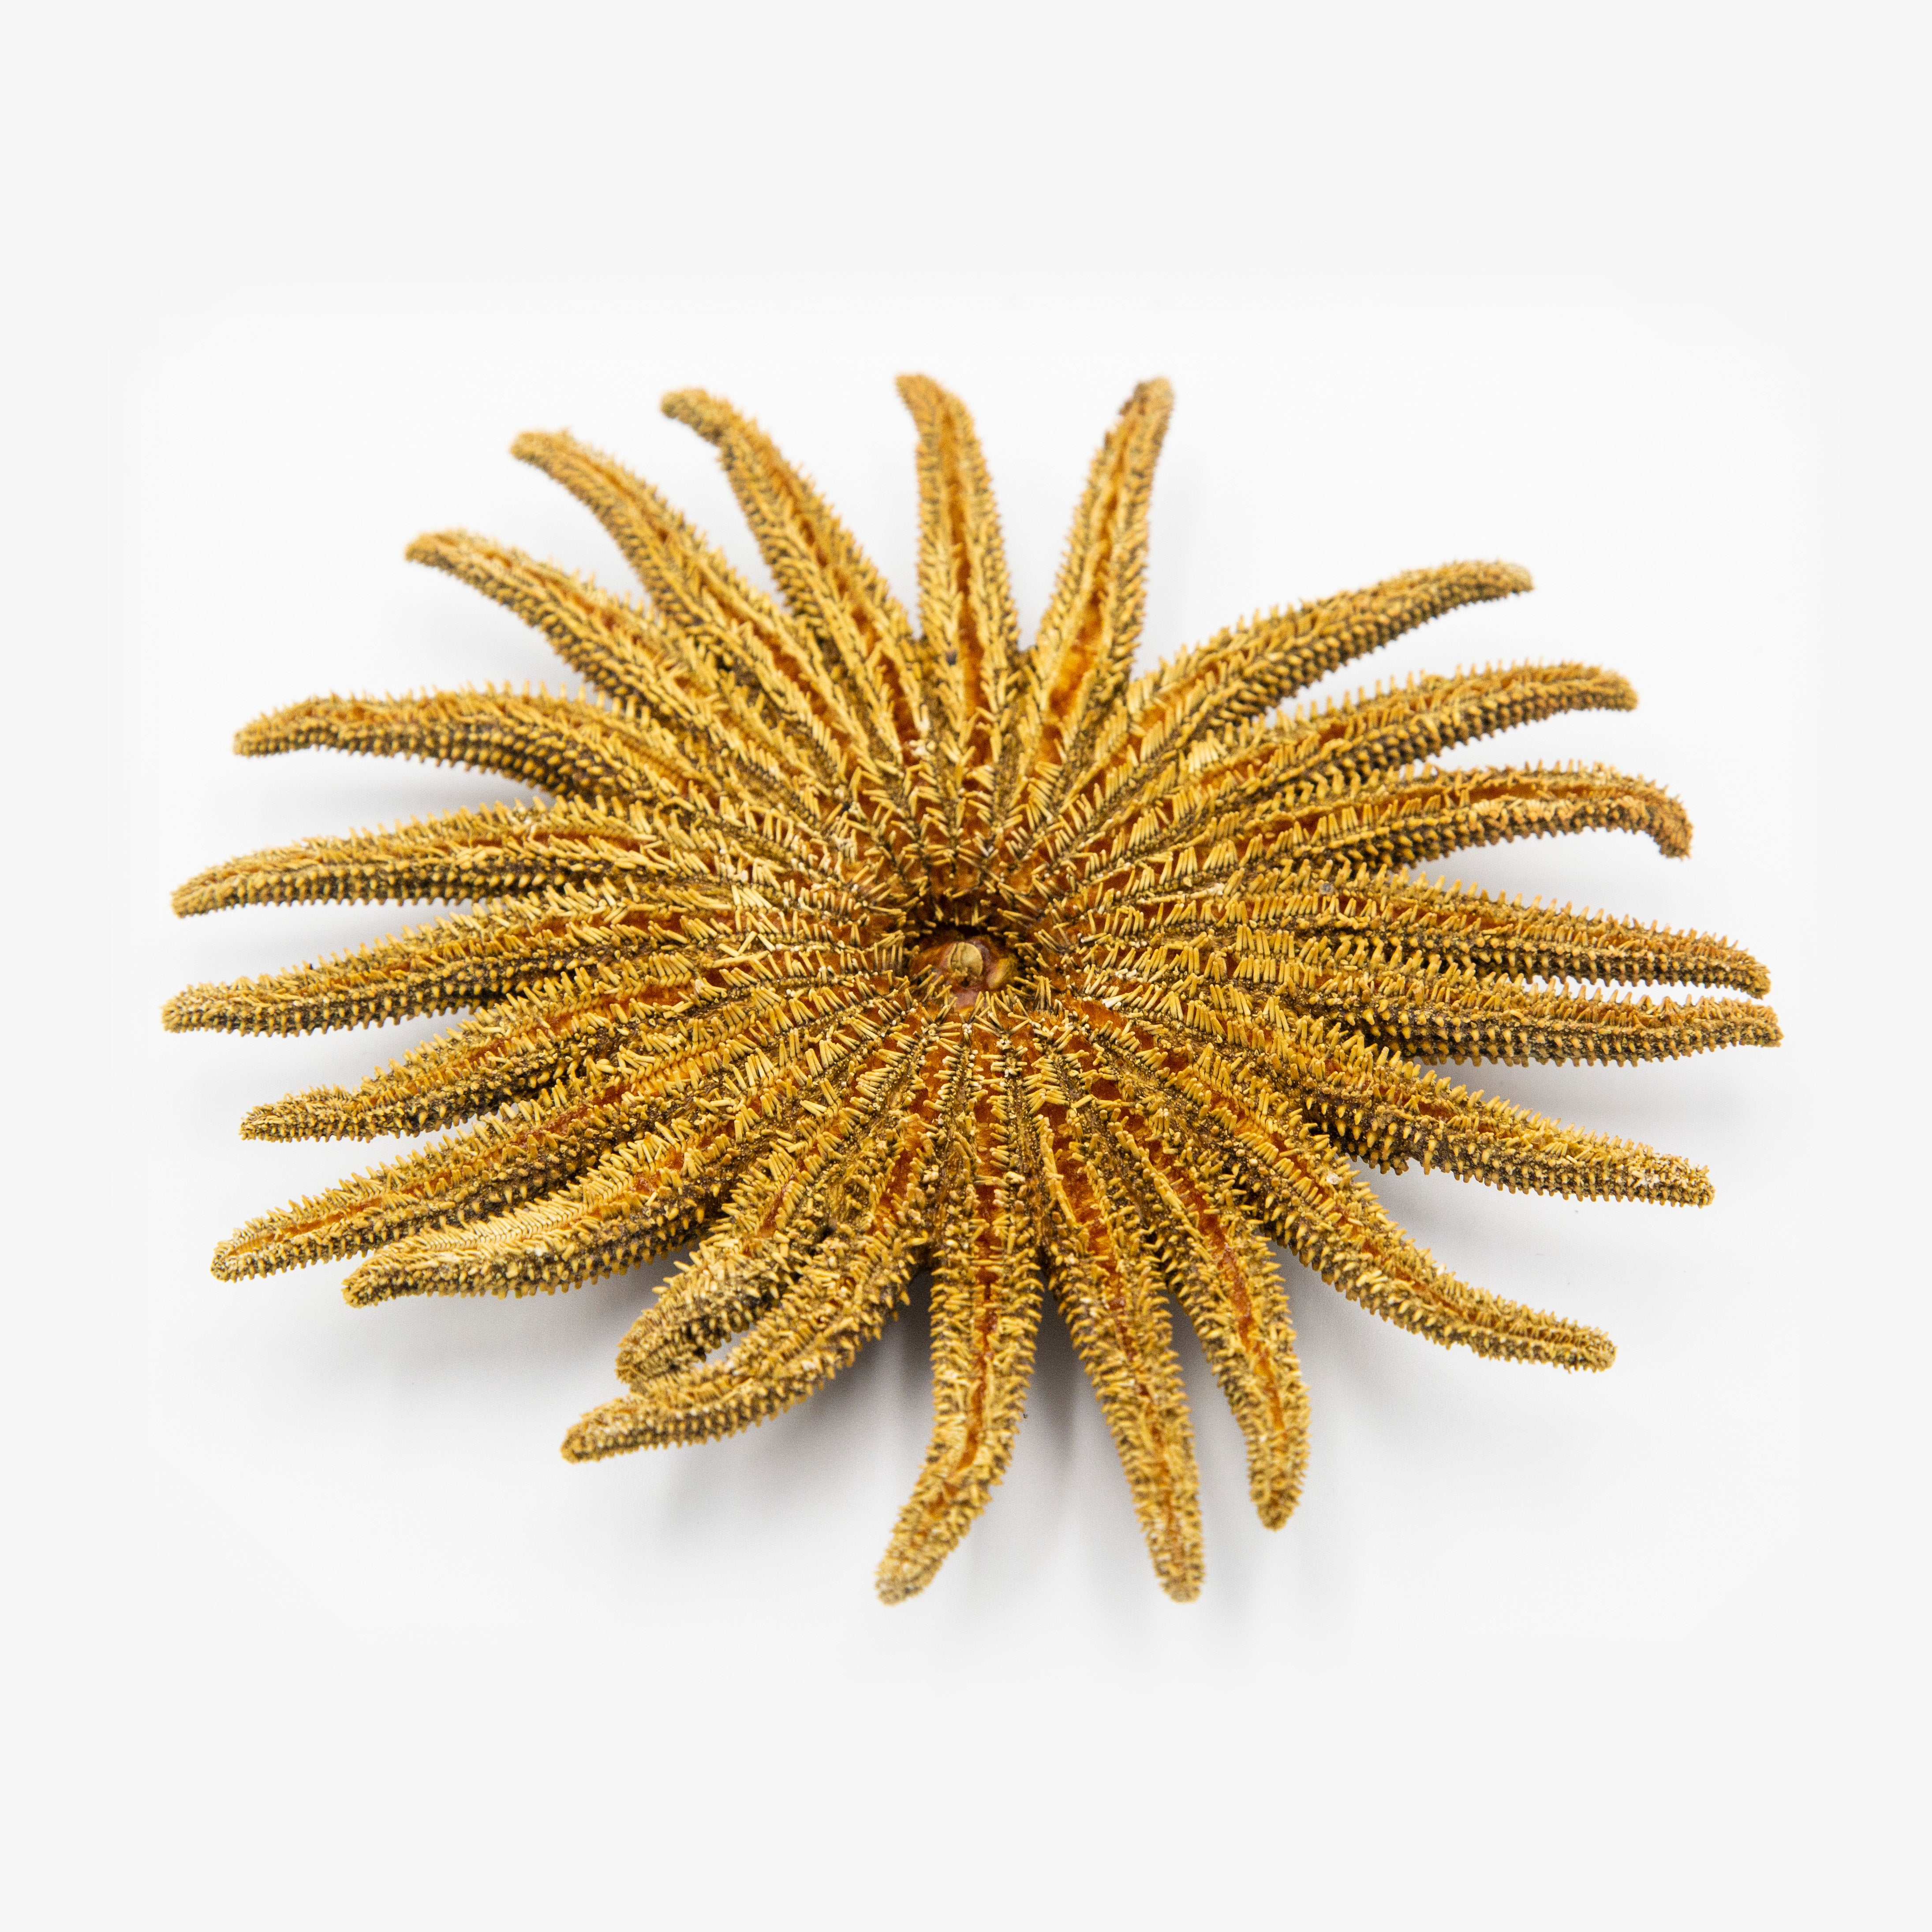 Sunflower Starfish AKA Sea Star